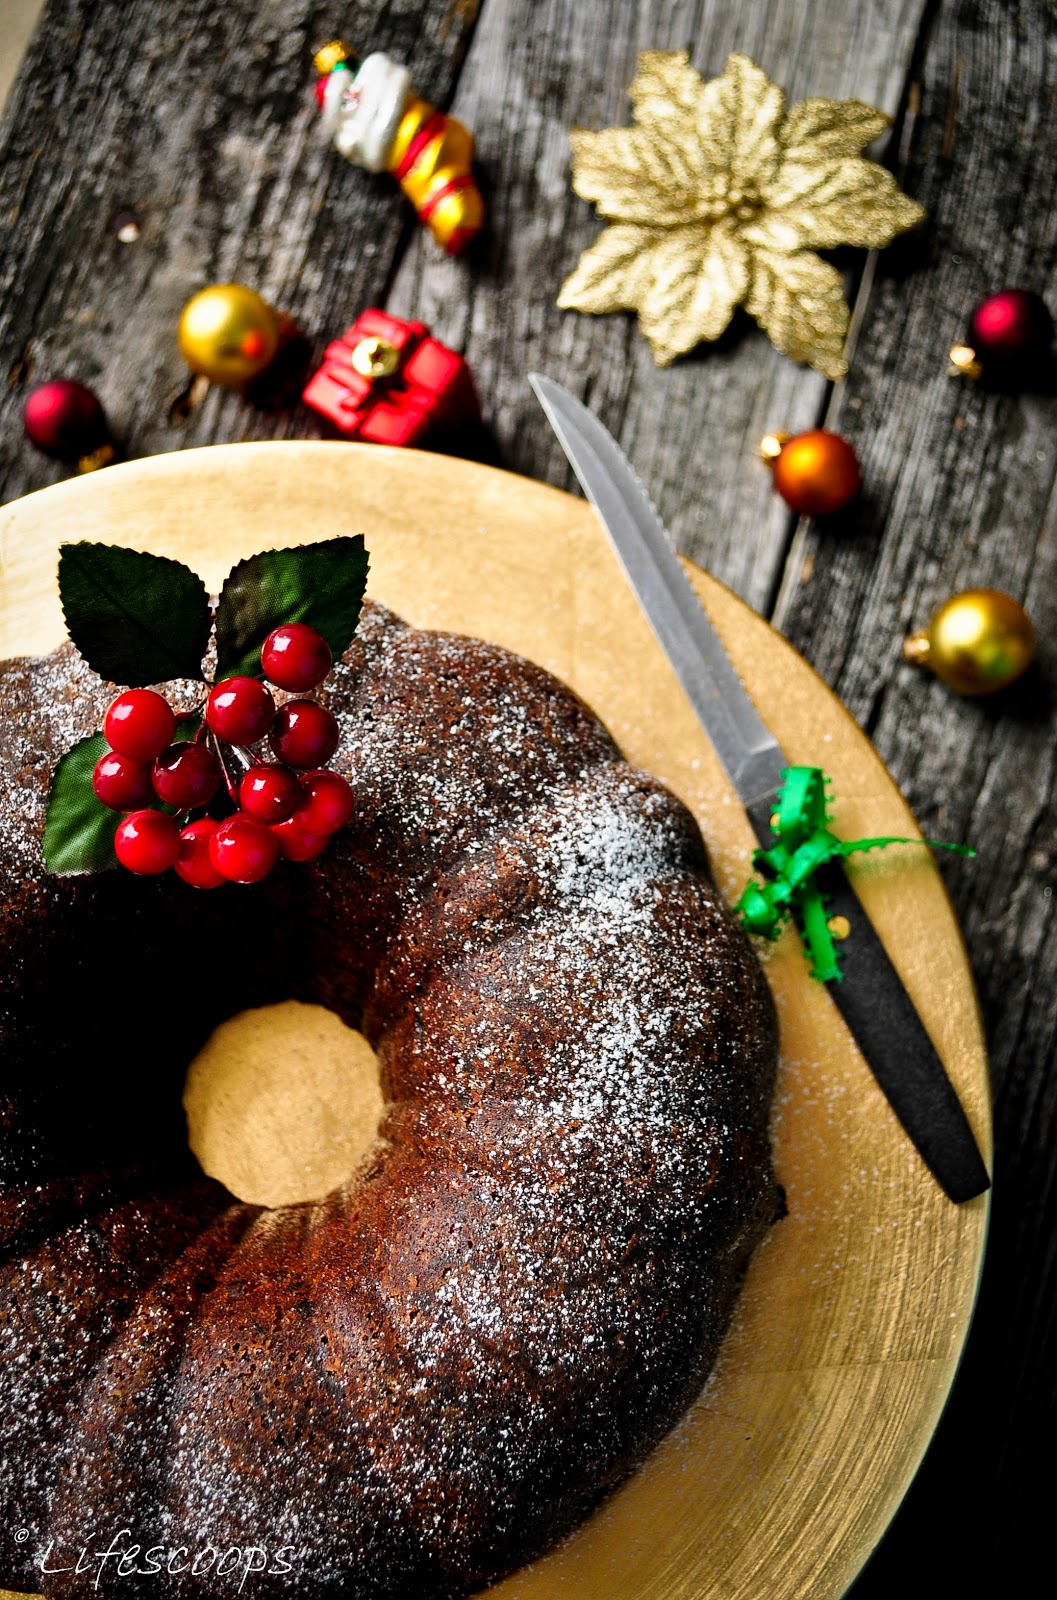 Life Scoops: Christmas Fruit Cake / Kerala Plum Cake